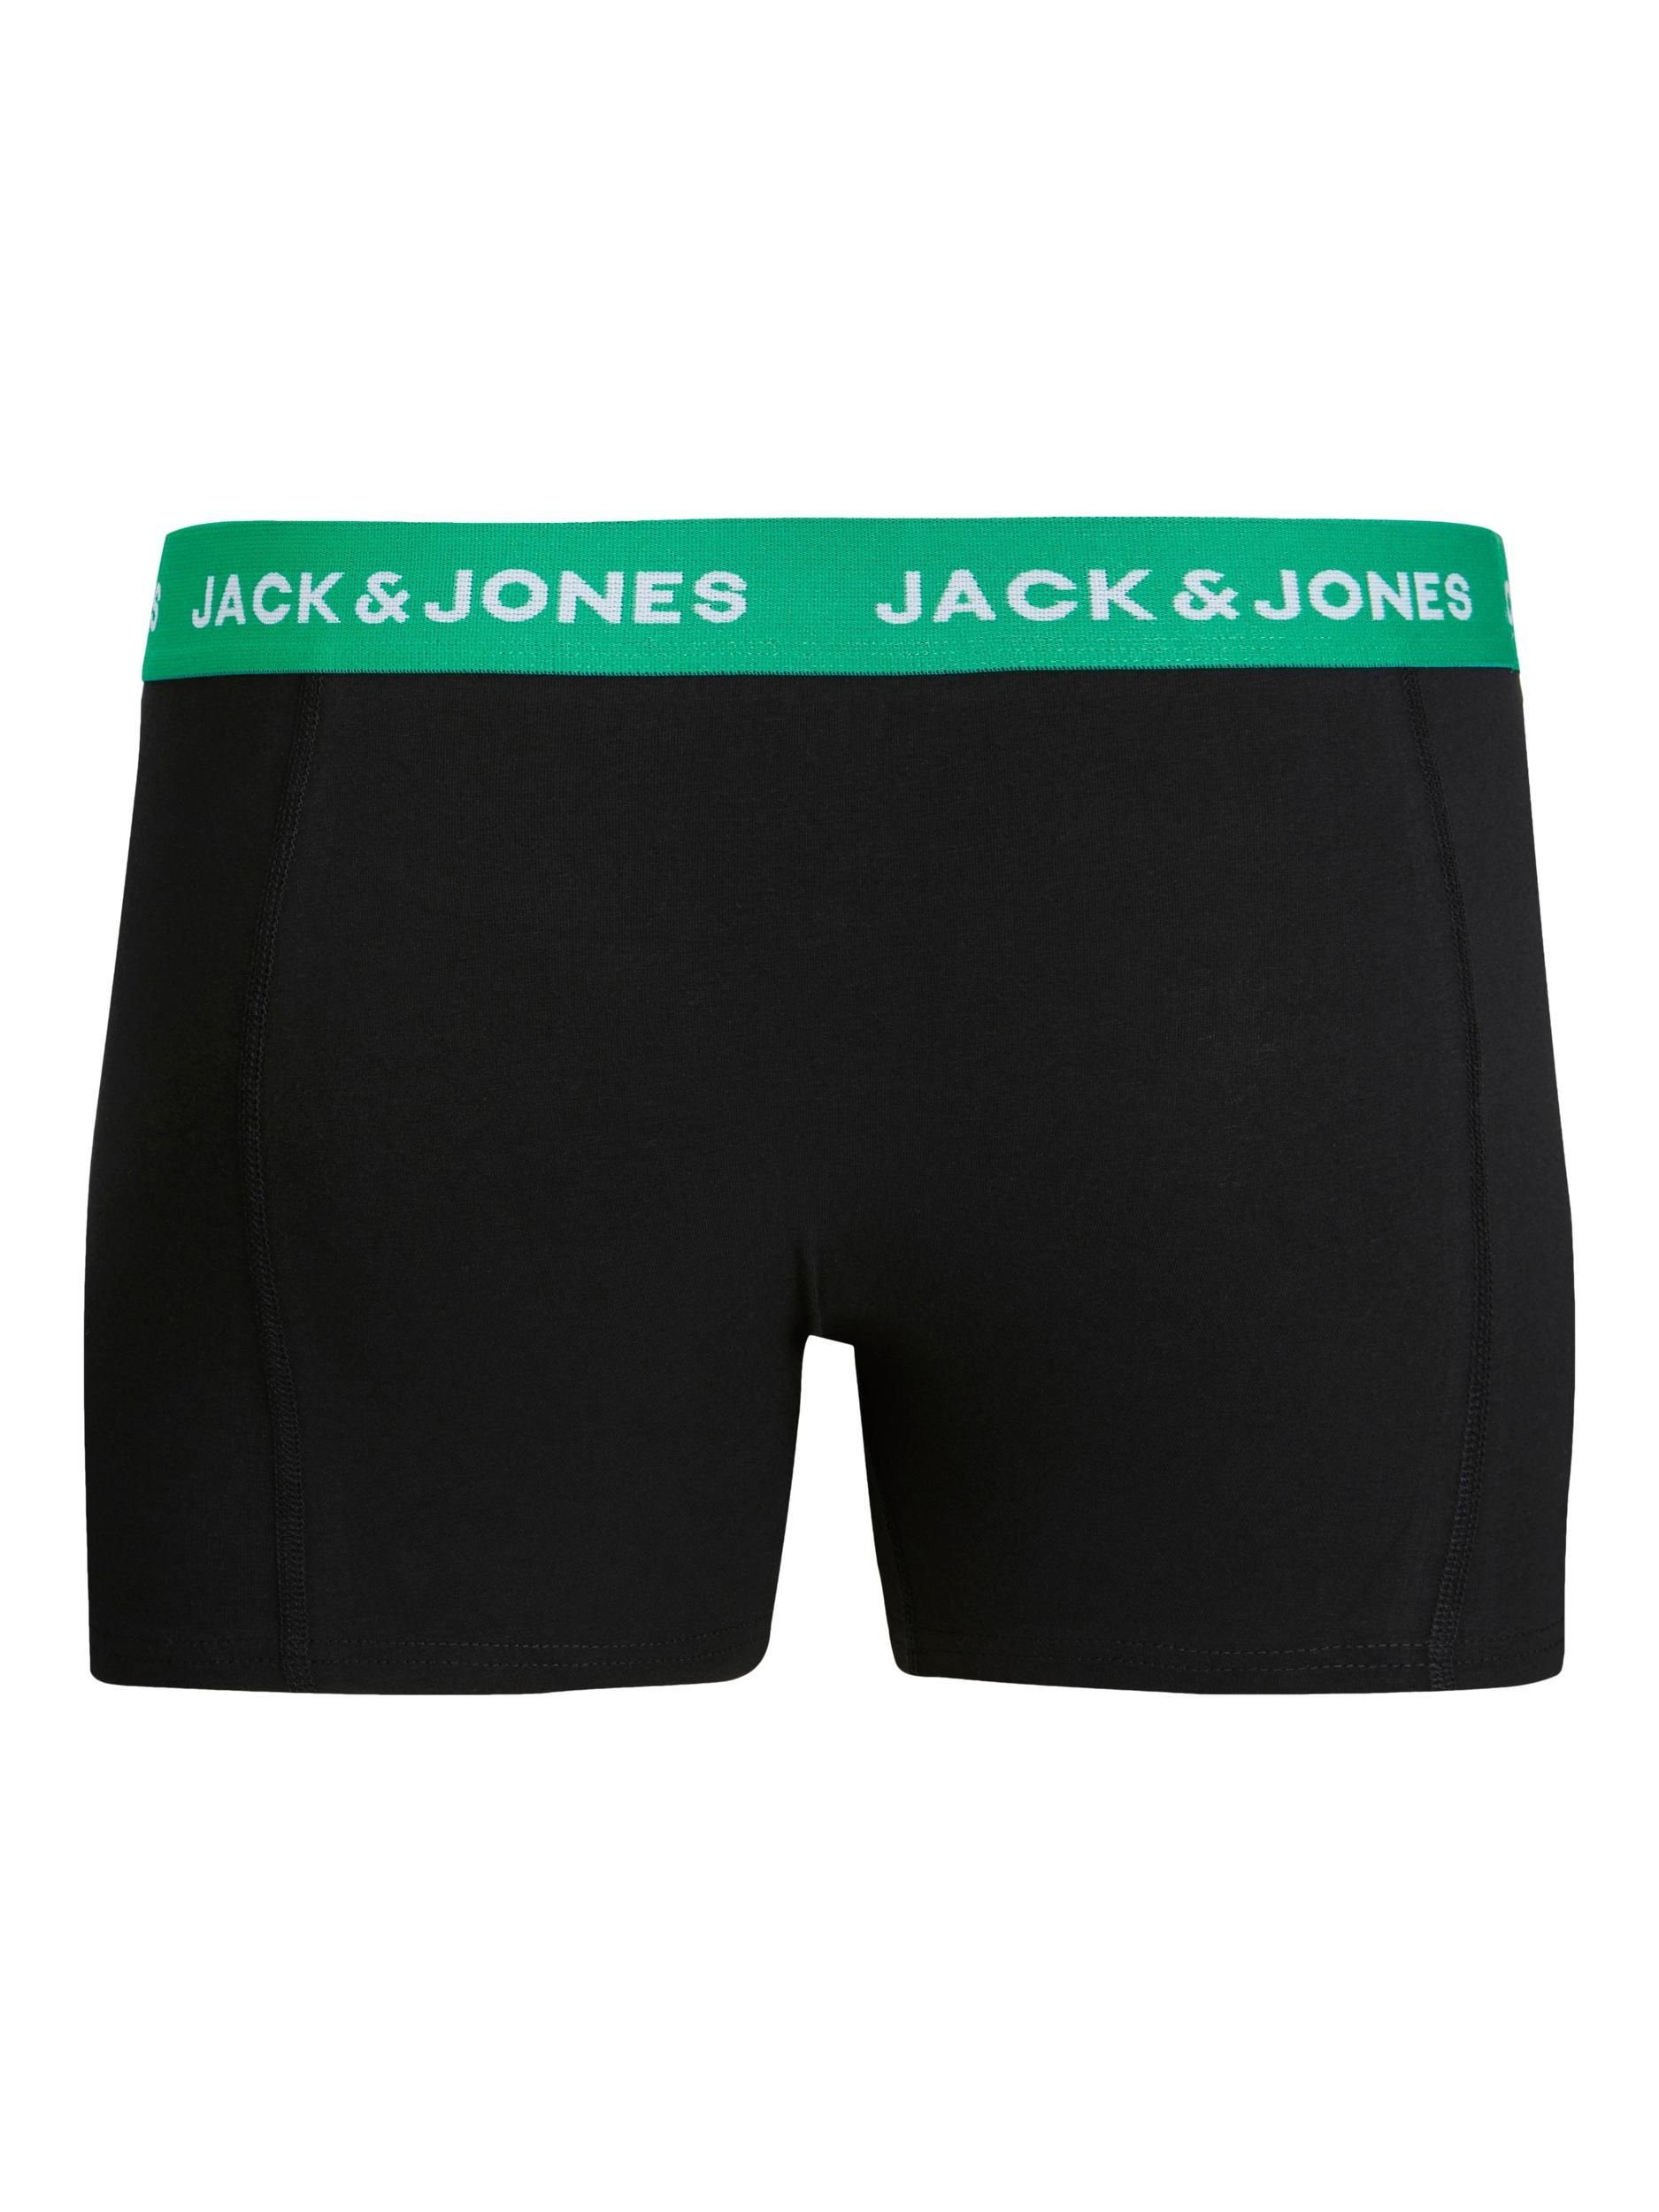 Jack & Jones Slip